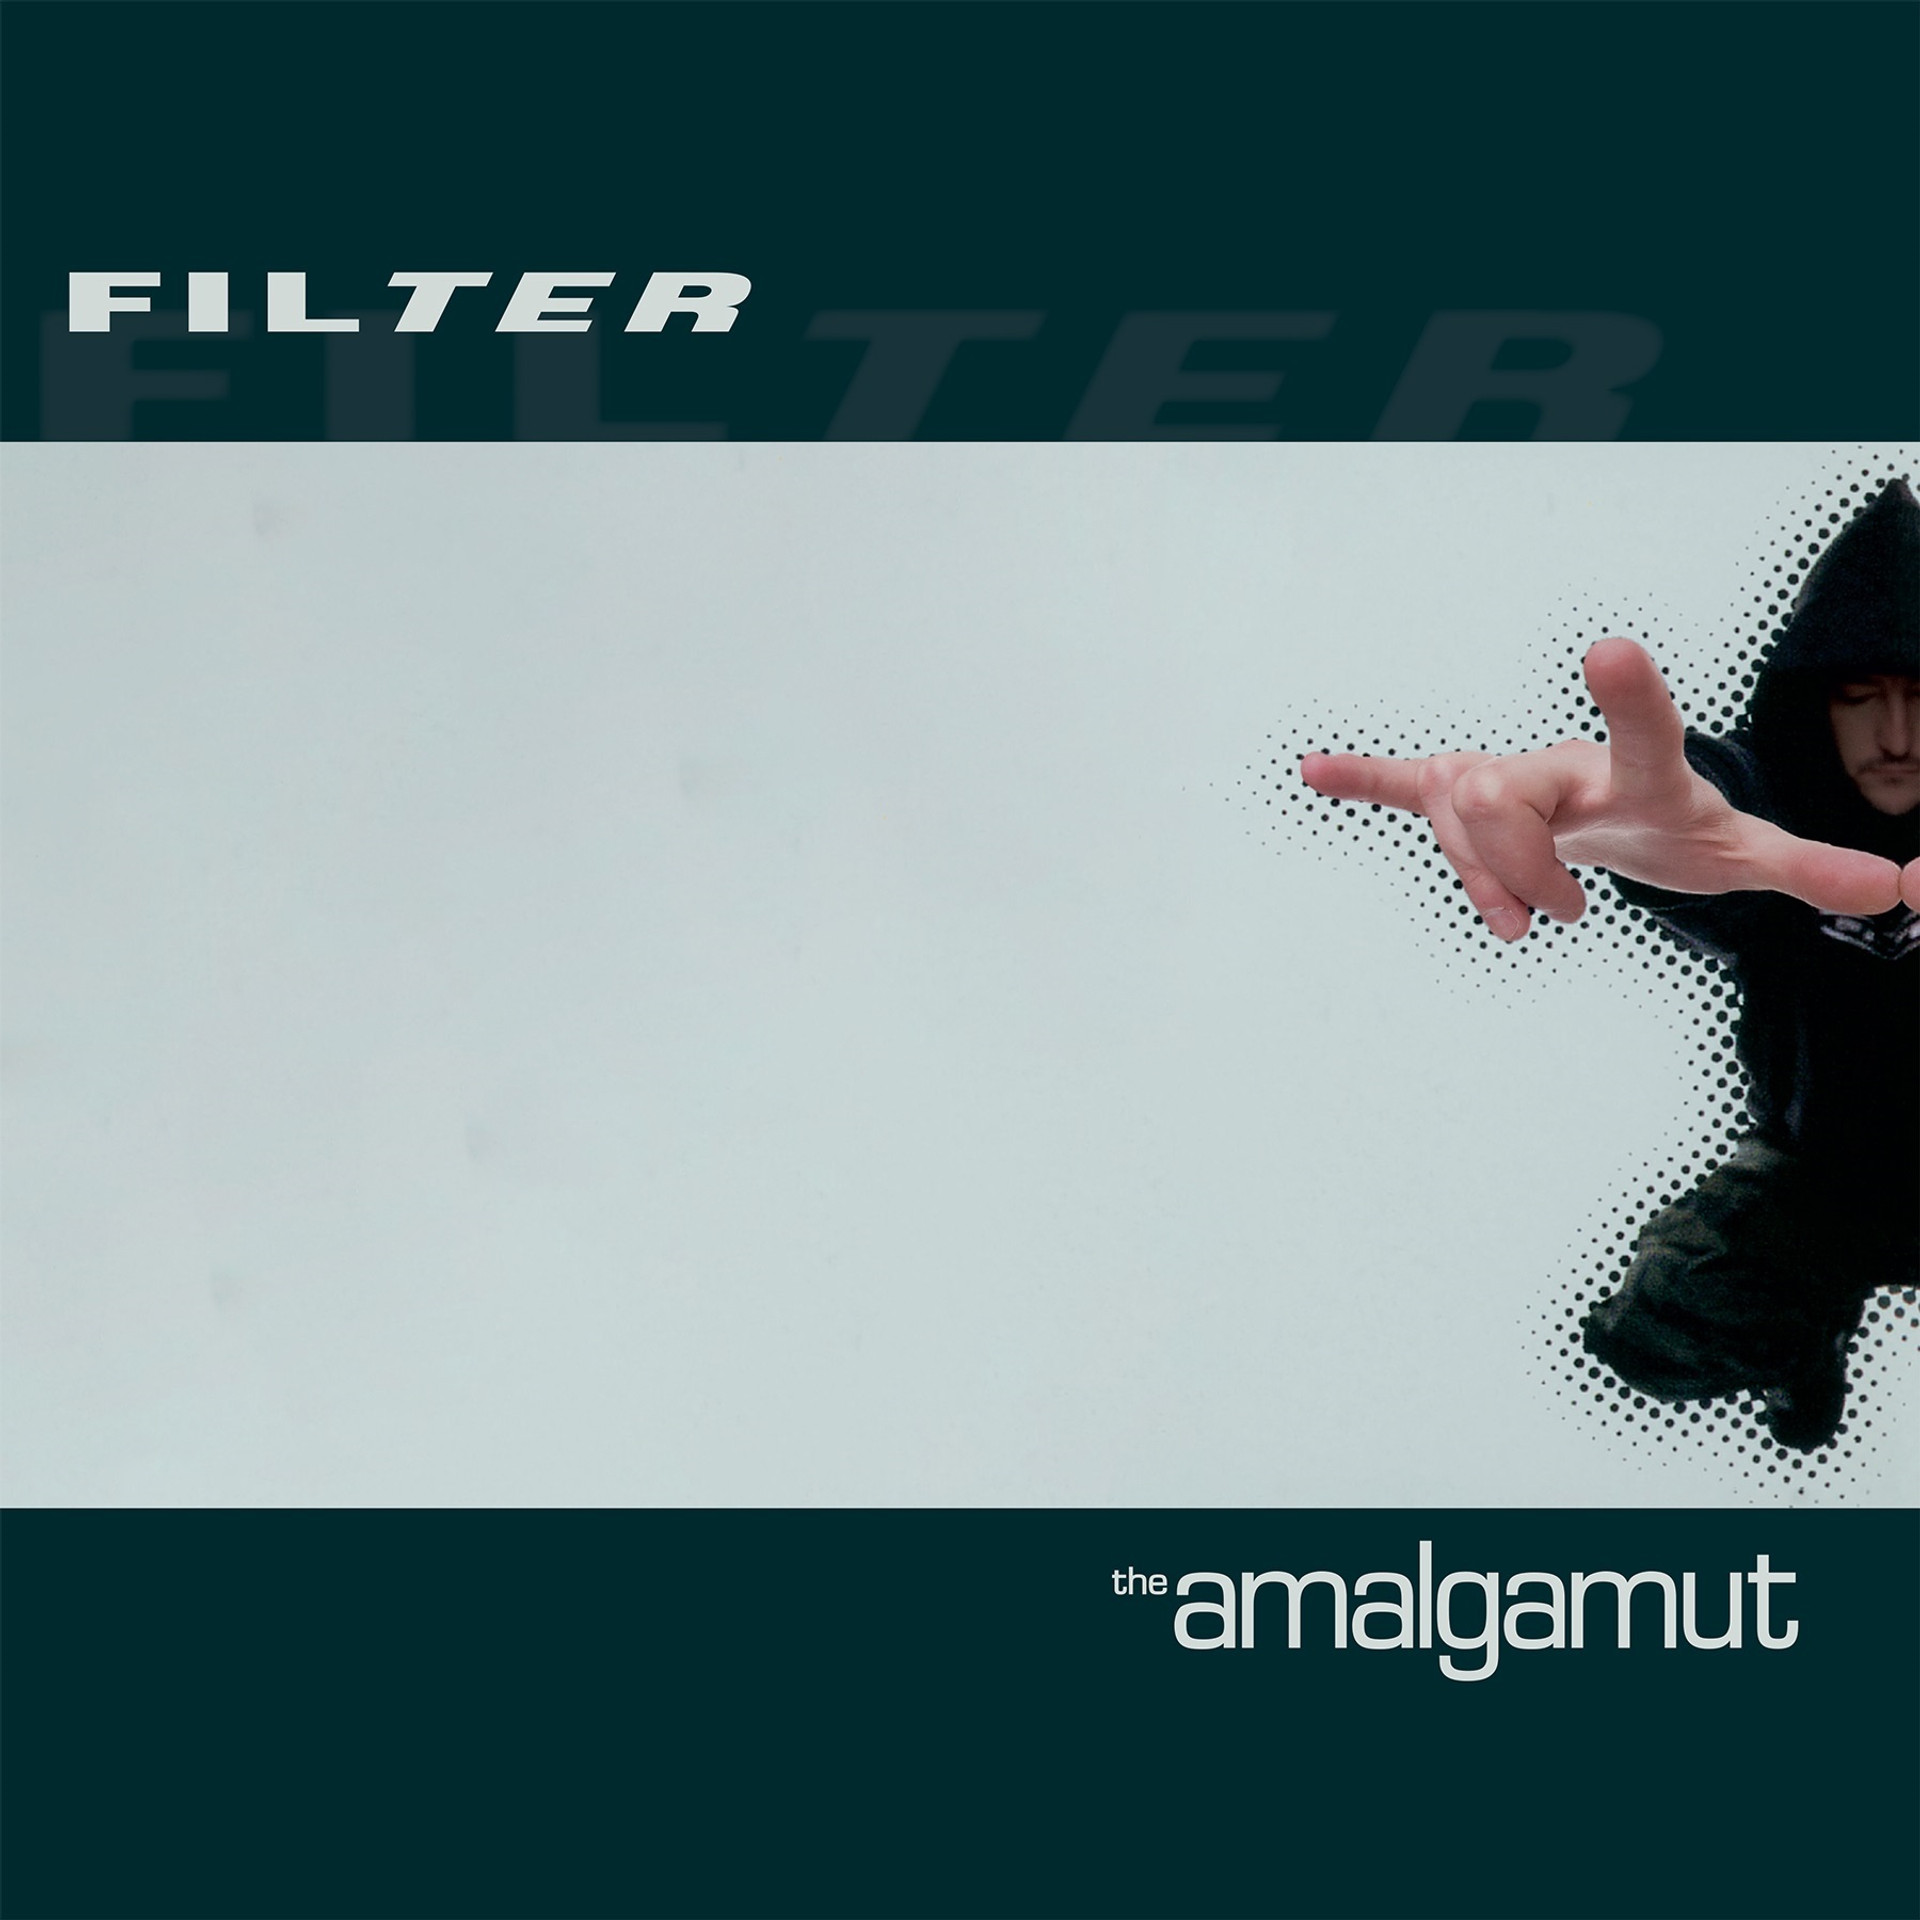 Filter ‘The Amalgamut’ (20th Anniversary) vinyl cover artwork